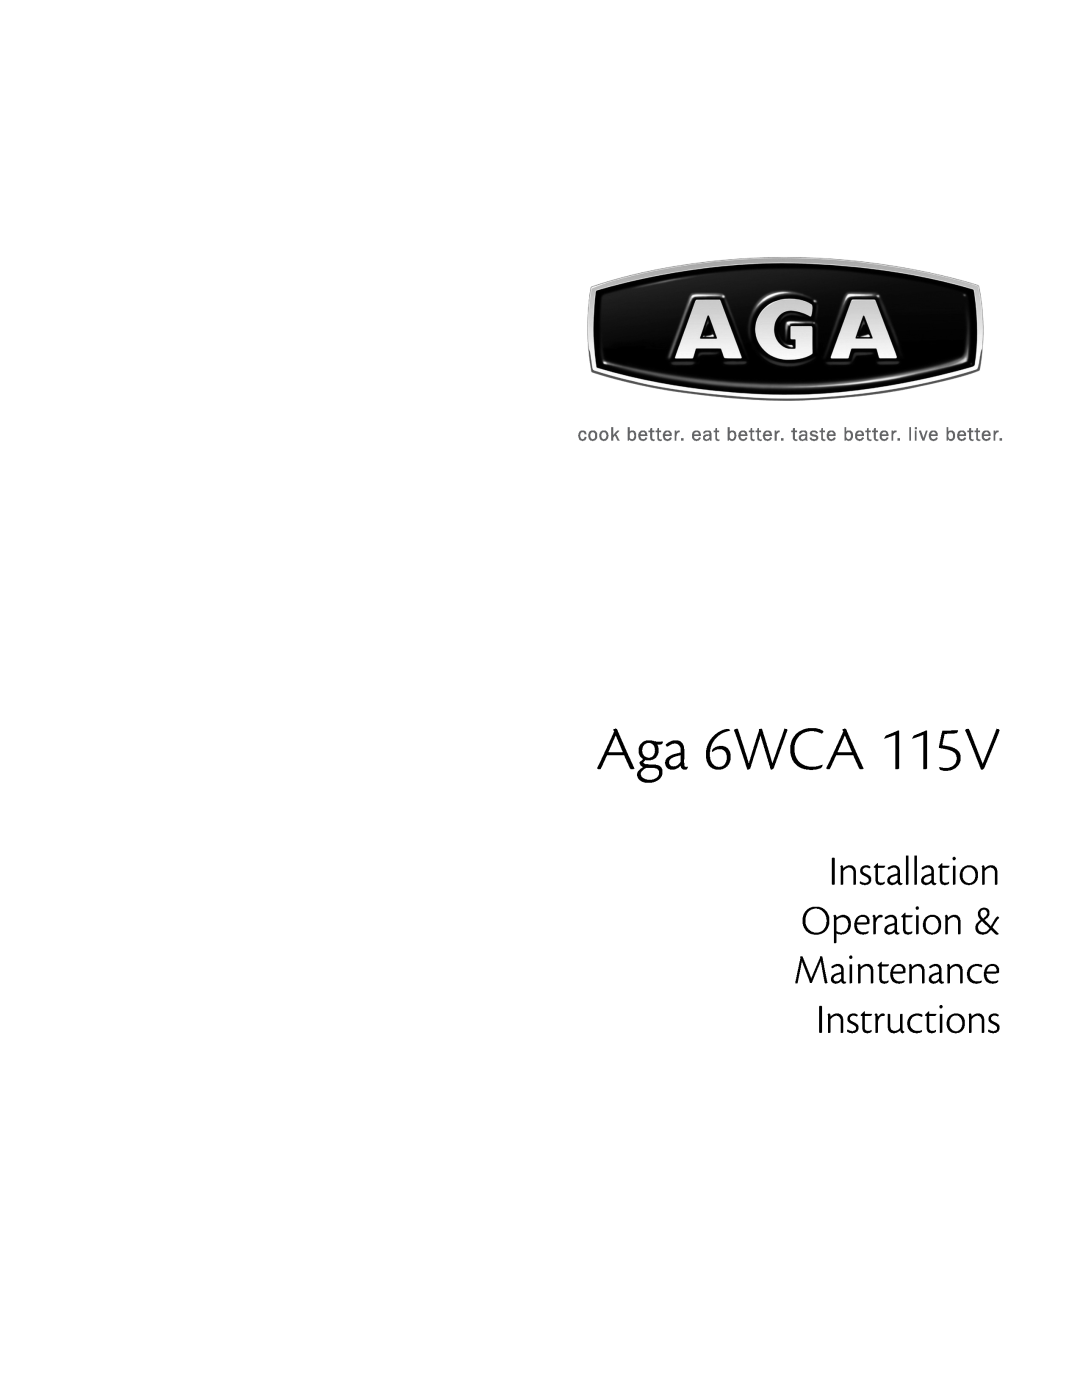 Aga Ranges 115V manual Installation Operation Maintenance Instructions, Aga 6WCA 